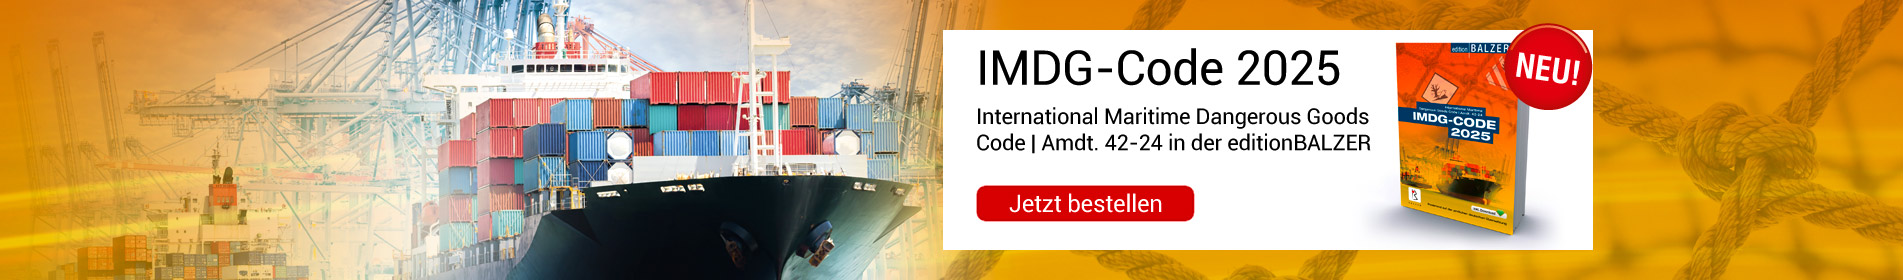 IMDG Code 2025